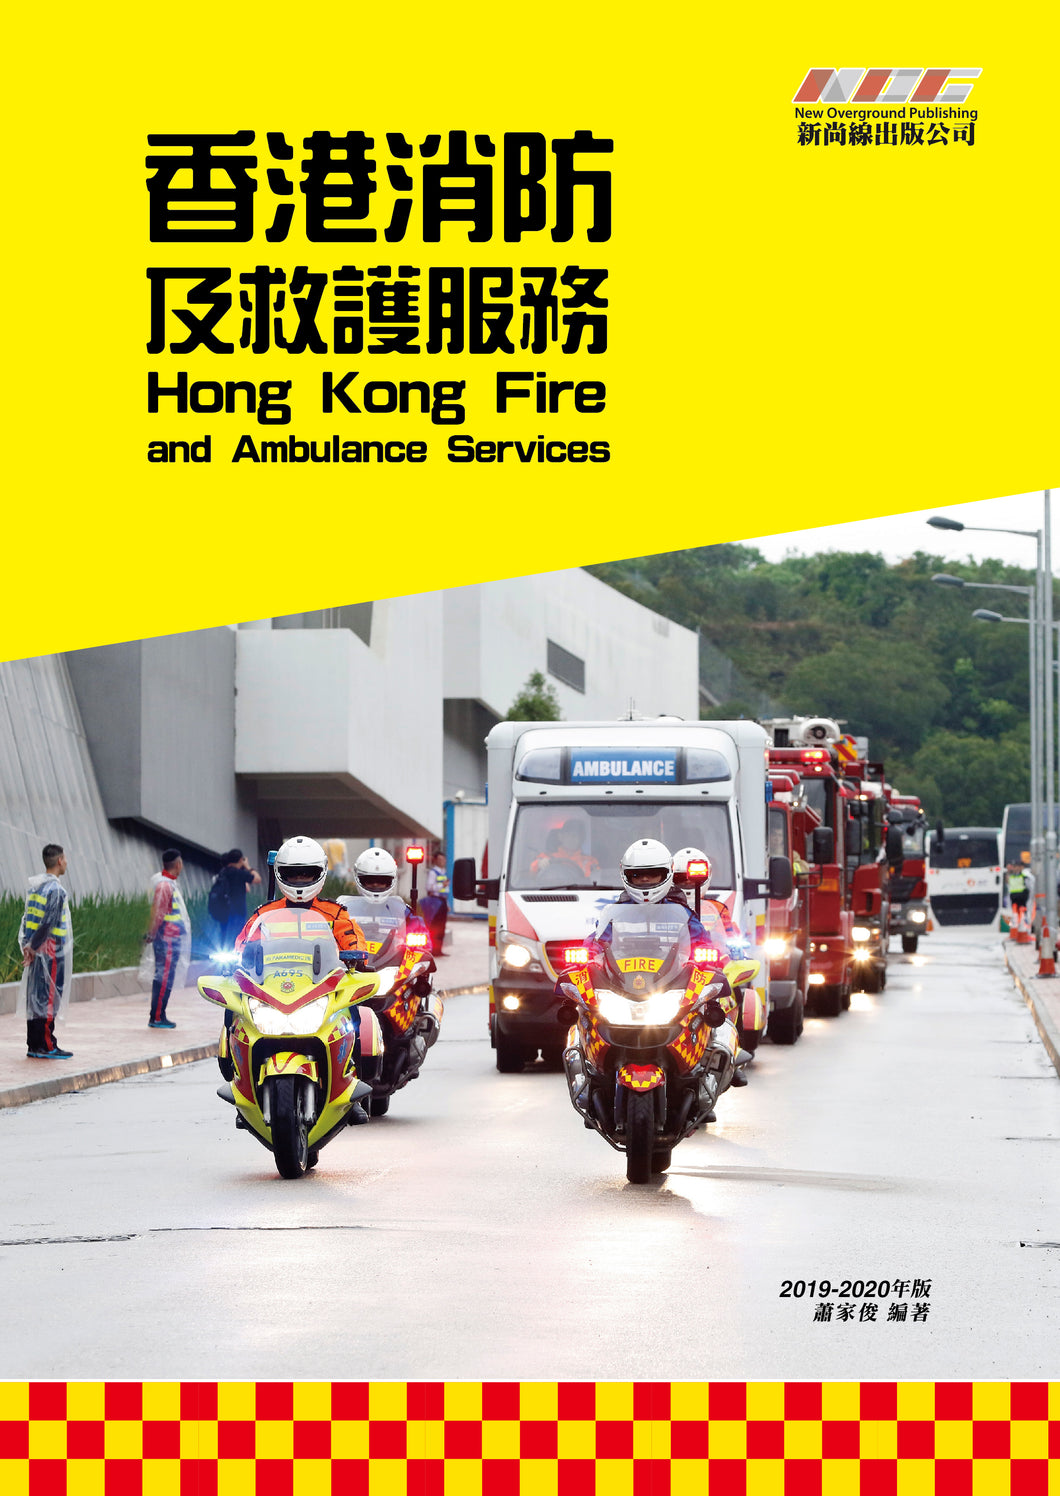 New Overground Publishing~Hong Kong Fire and Ambulance service